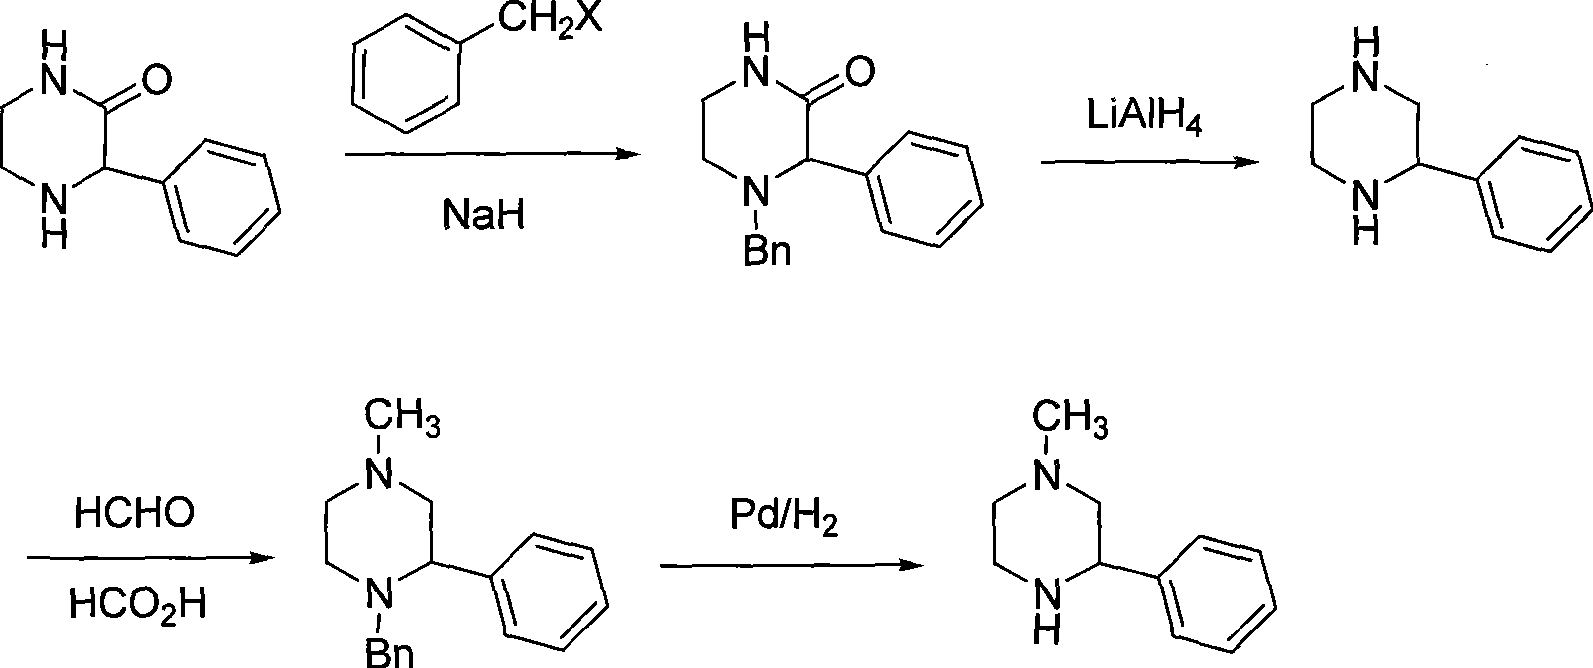 Preparation of medicament intermediate 1-methyl-3-phenyl piperazine